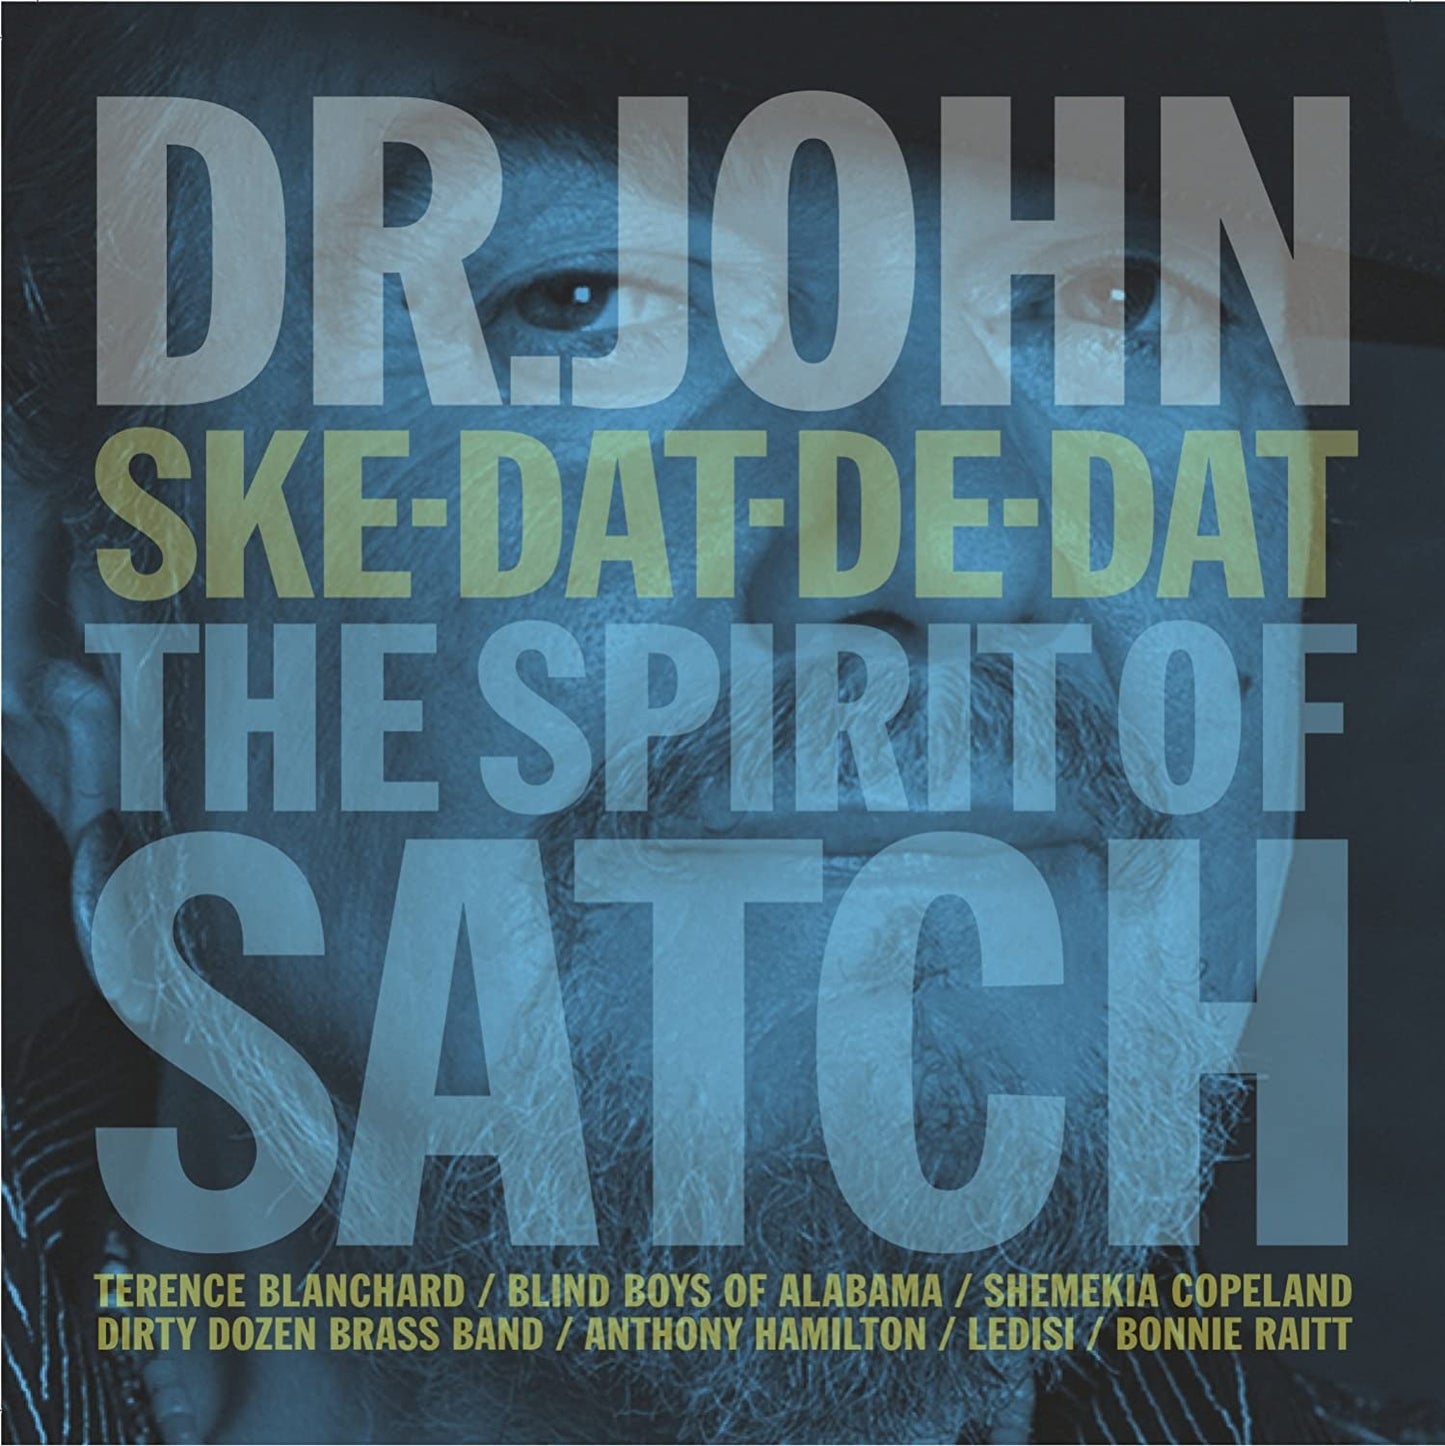 Dr. John - Ske-Dat-De-Dat The Sprit Of Satch - CD